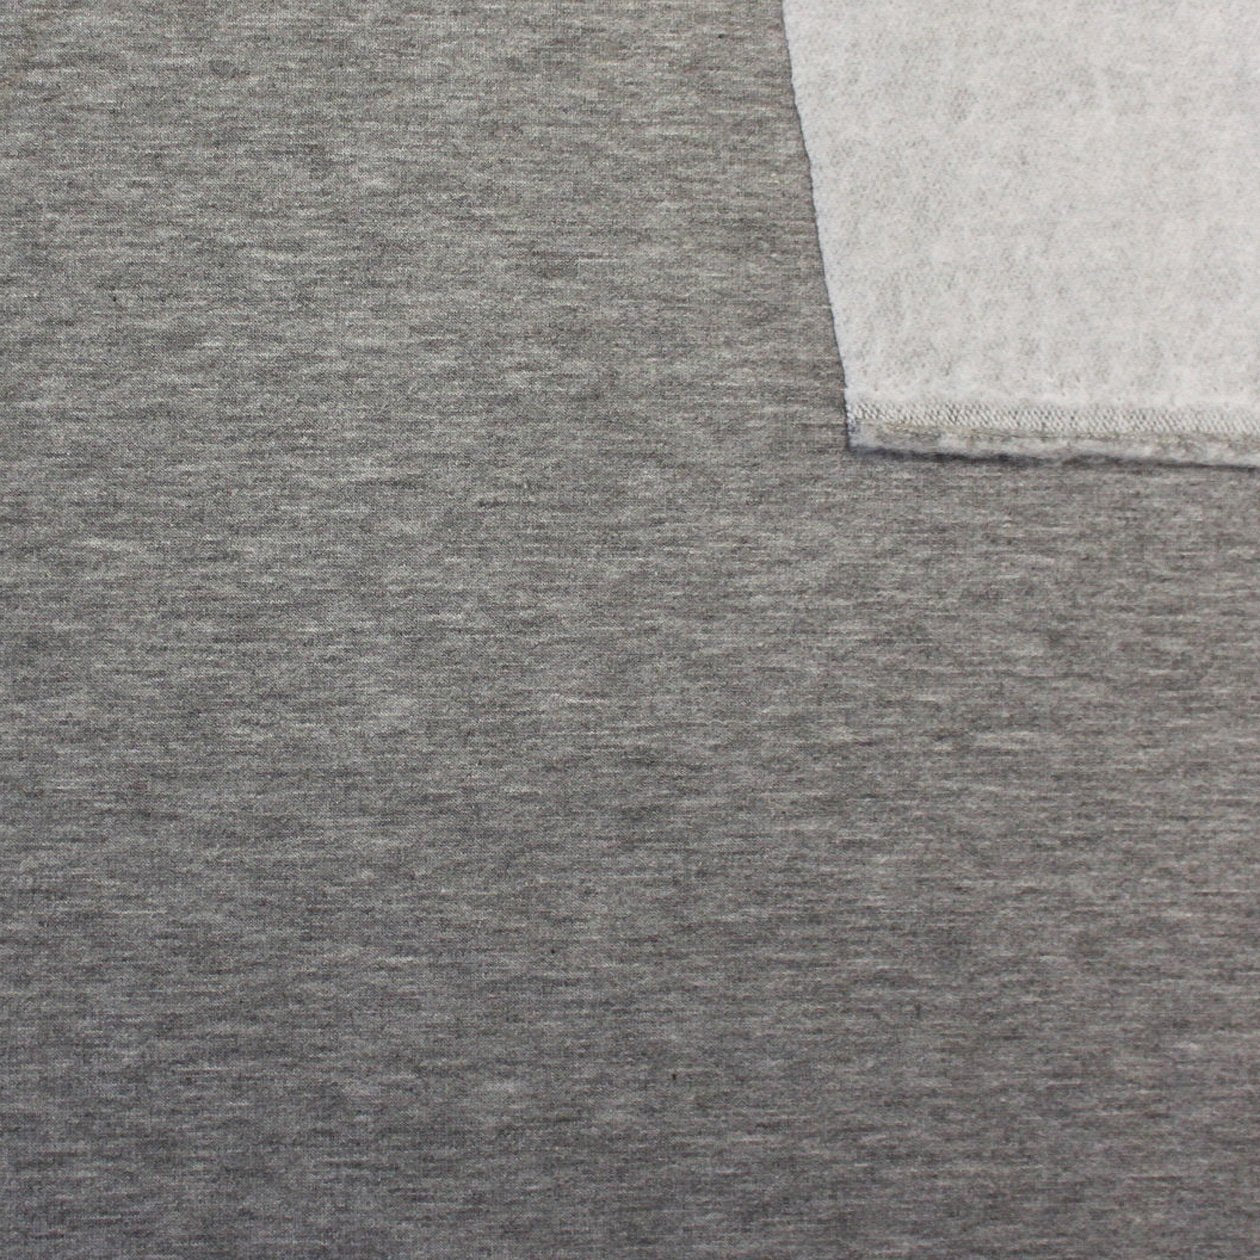 Medium Grey FLEECE Sweatshirt Knit Fabric Fabric, Raspberry Creek Fabrics, watermarked, restored